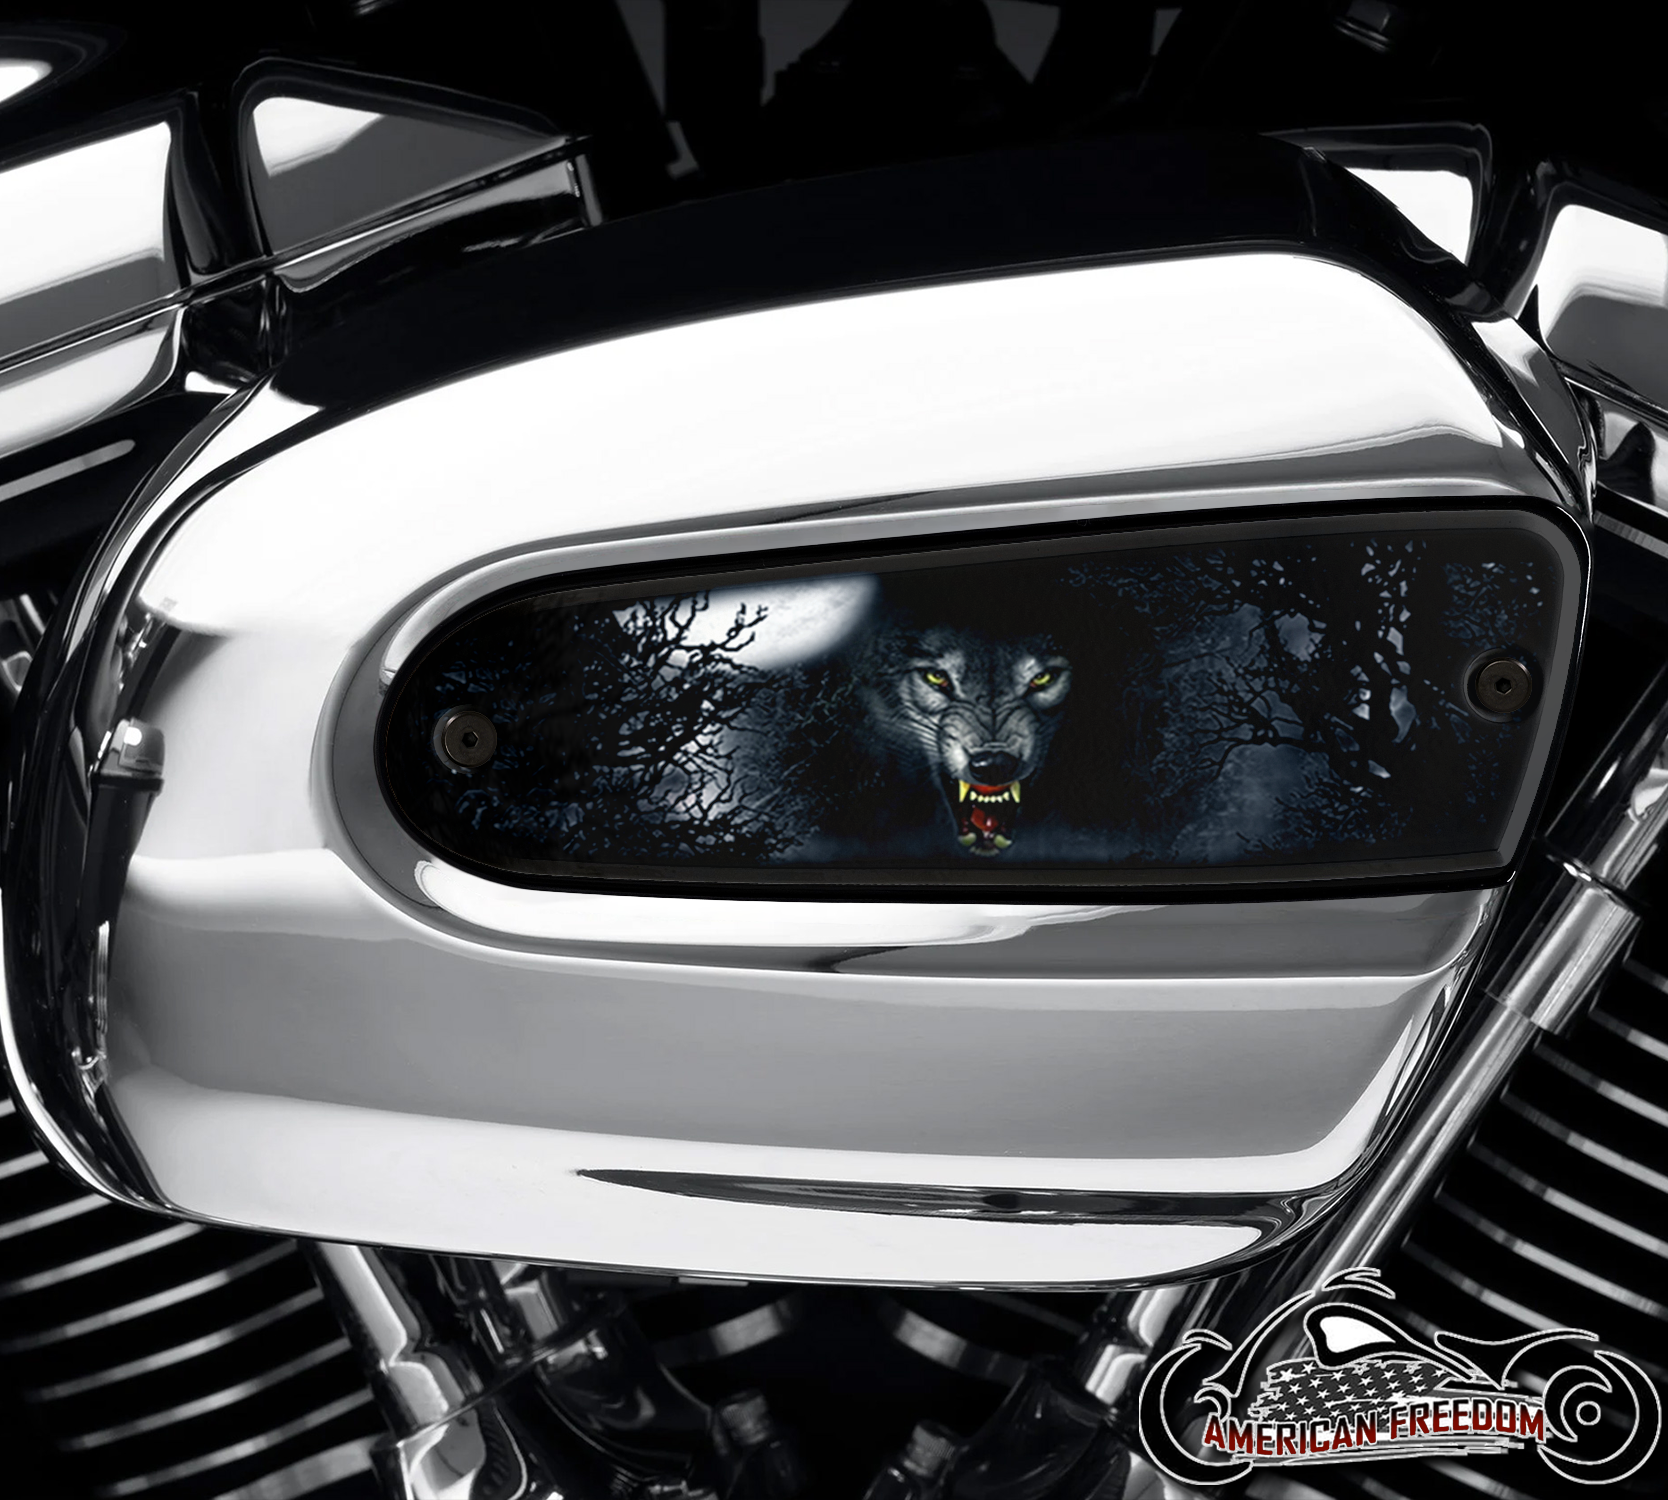 Harley Davidson Wedge Air Cleaner Insert - Wolf in Woods